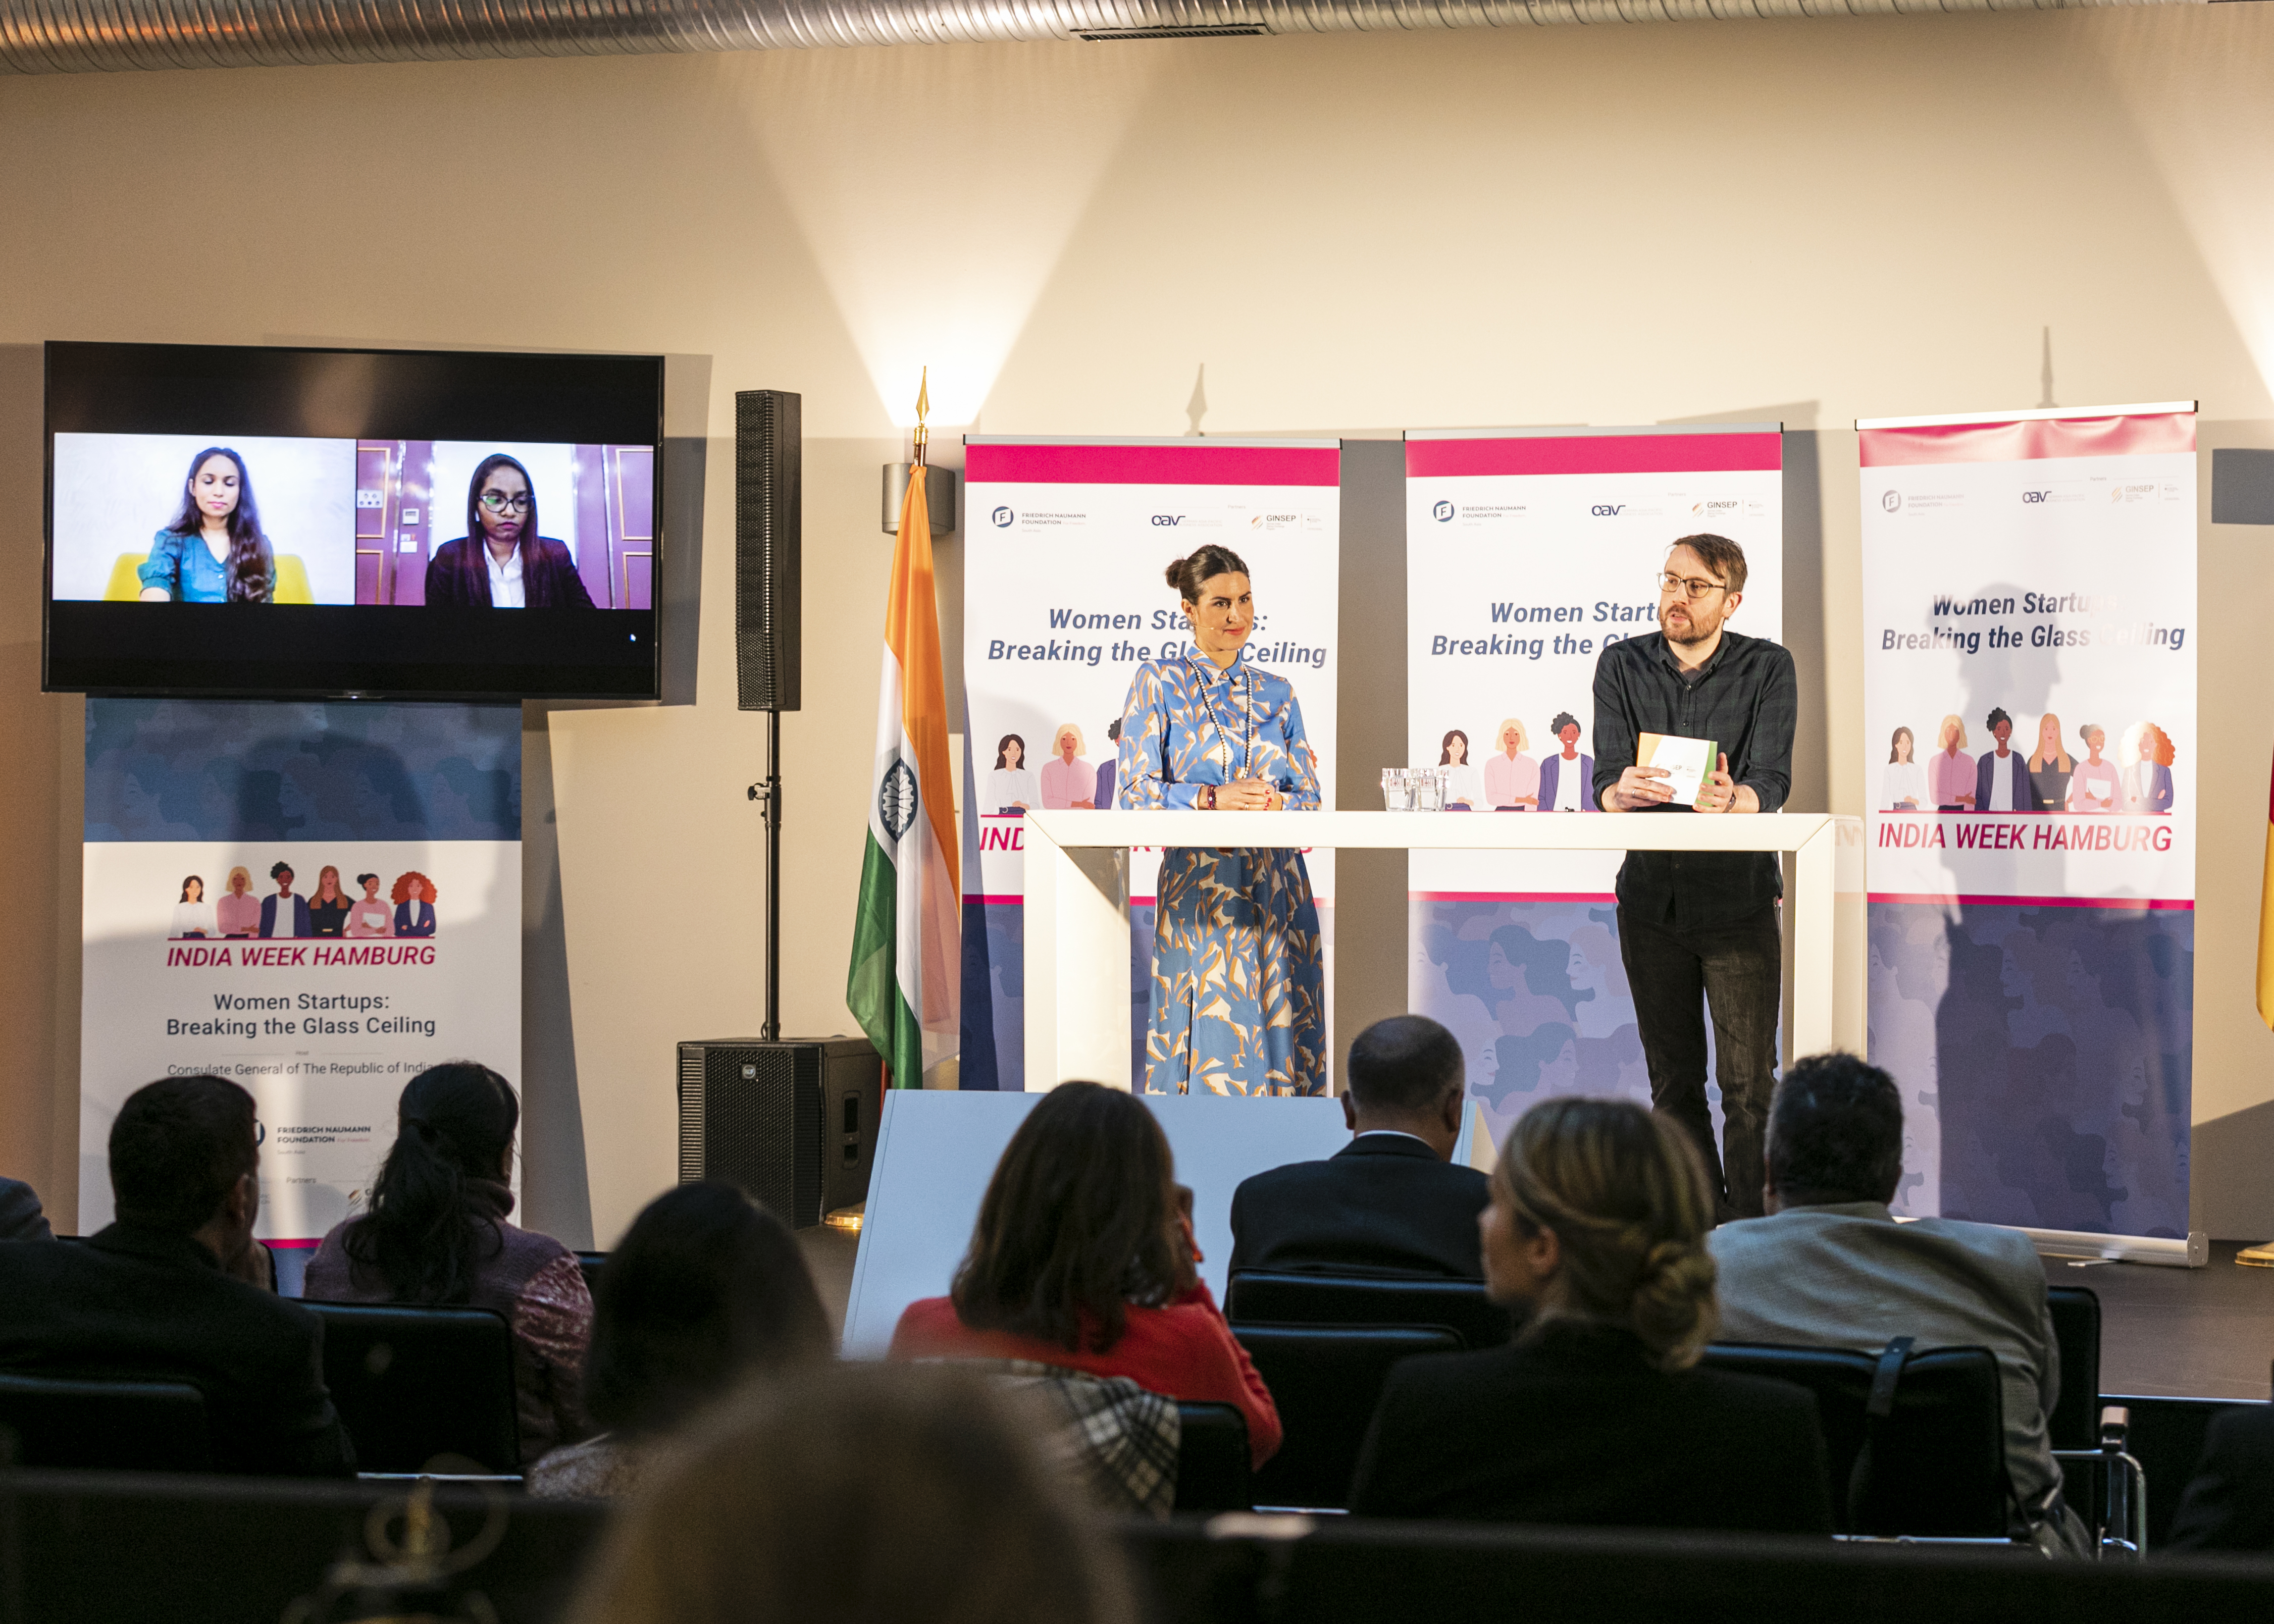 Women Startups Event in India Week Hamburg